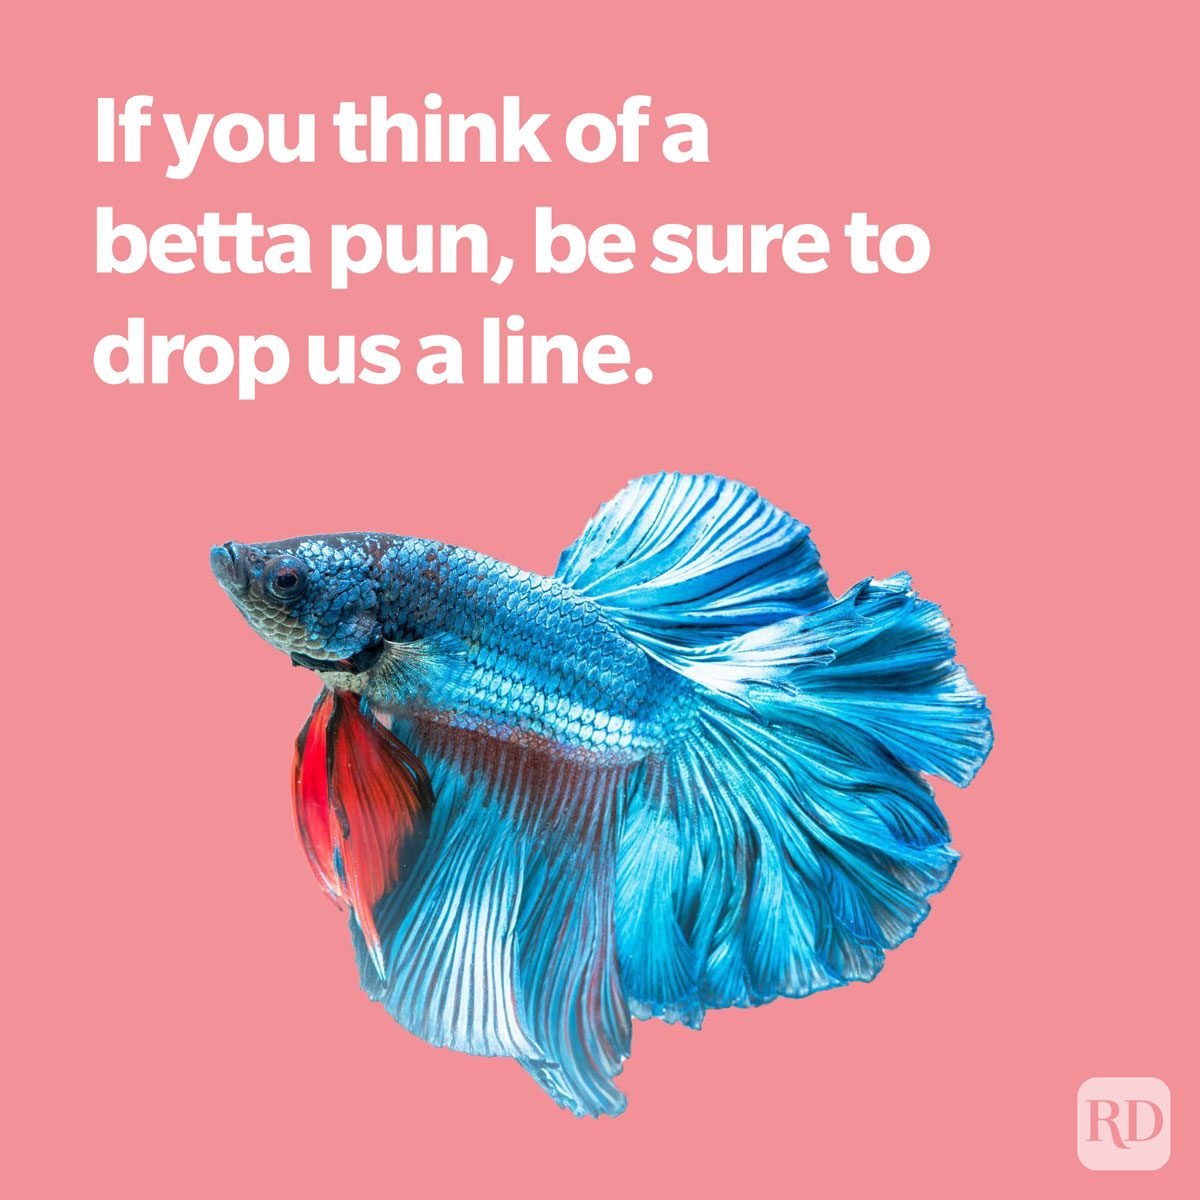 Fish pun featuring a betta fish